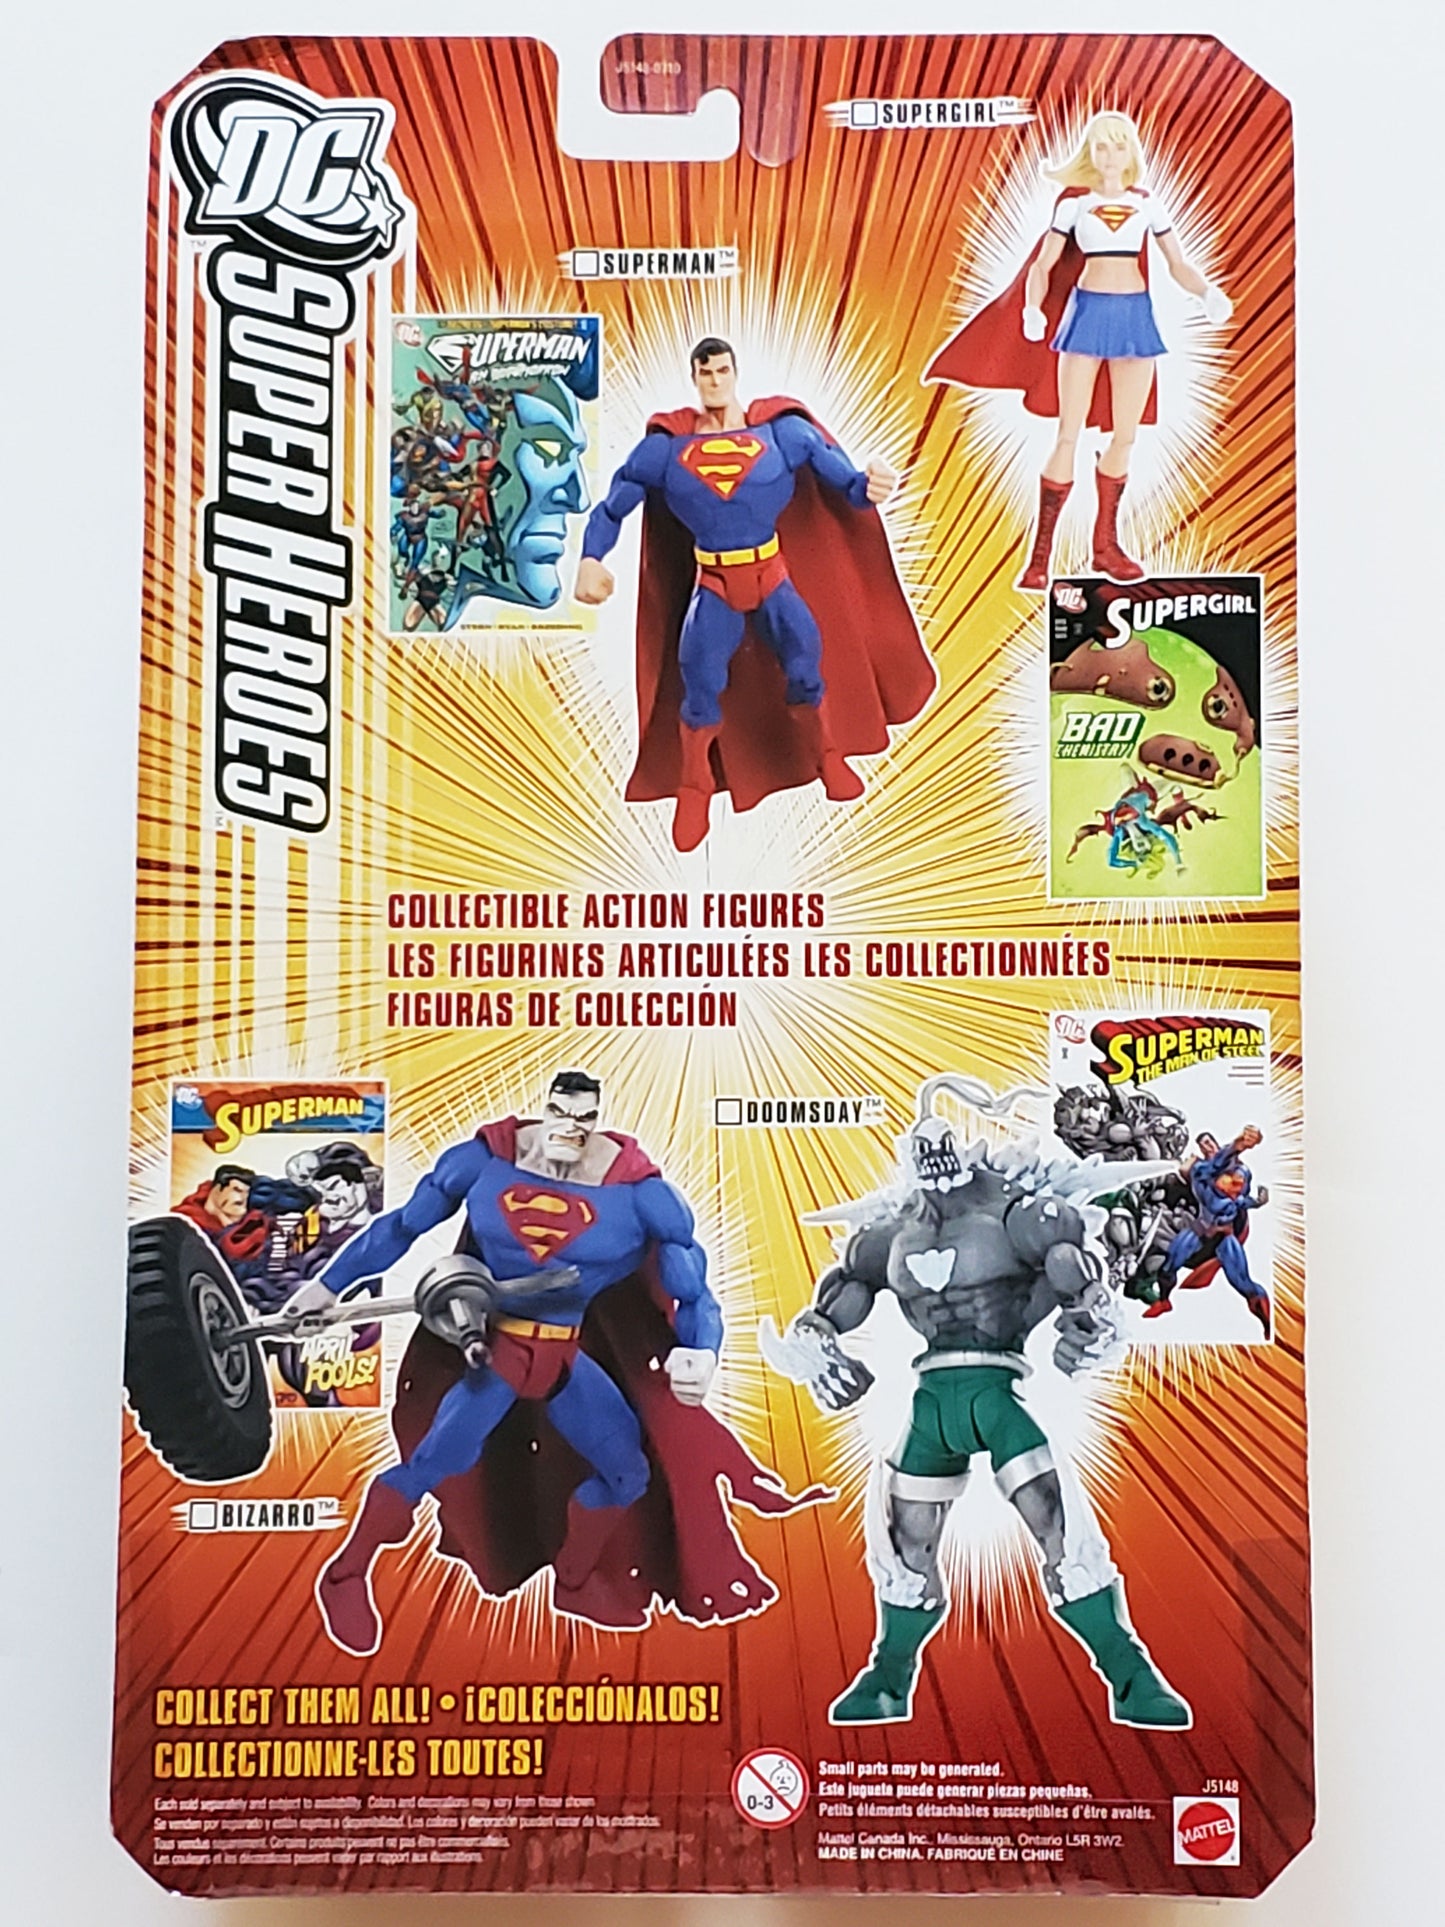 DC Superheroes Series 2 Doomsday Action Figure